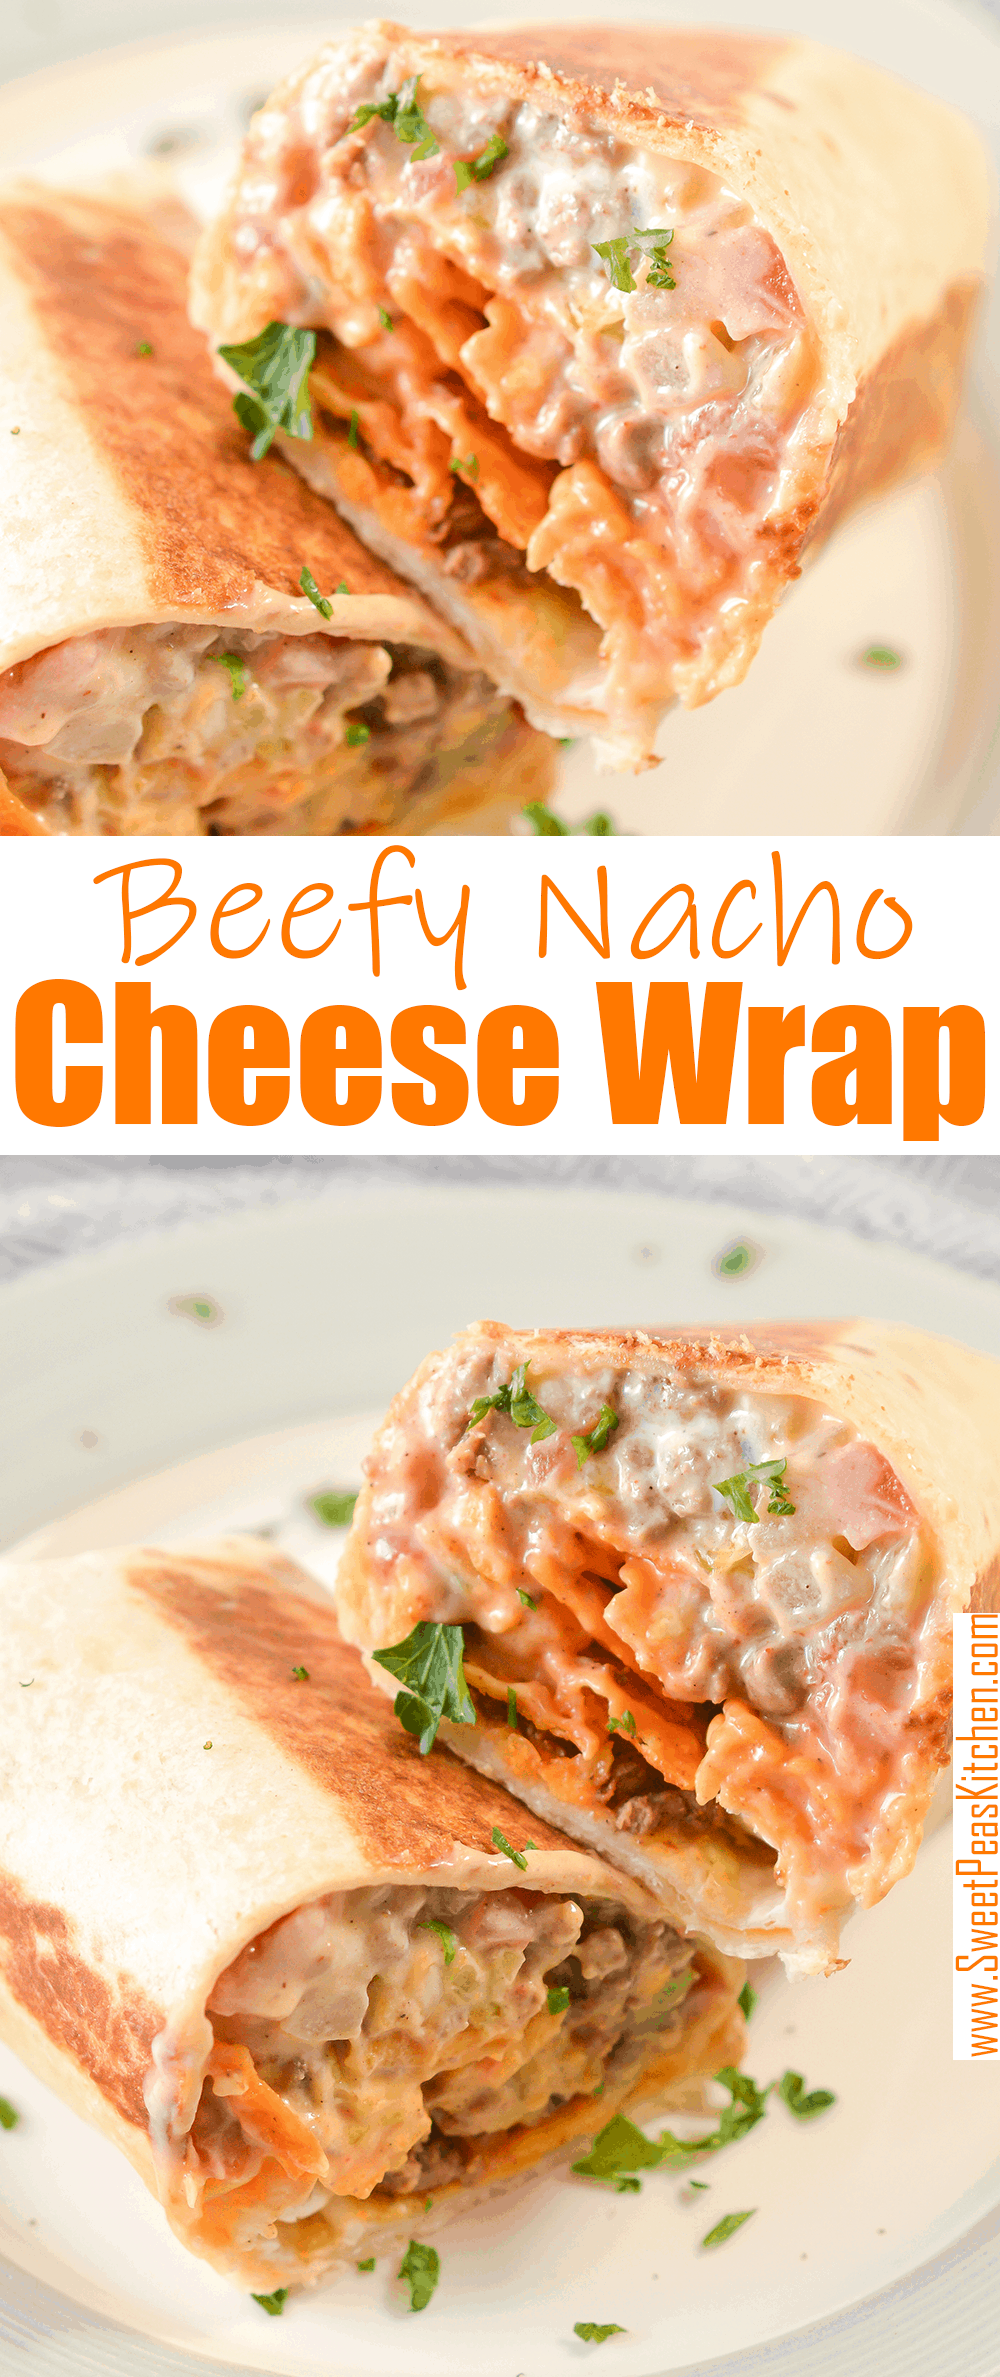 Beefy Nacho Cheese Wrap